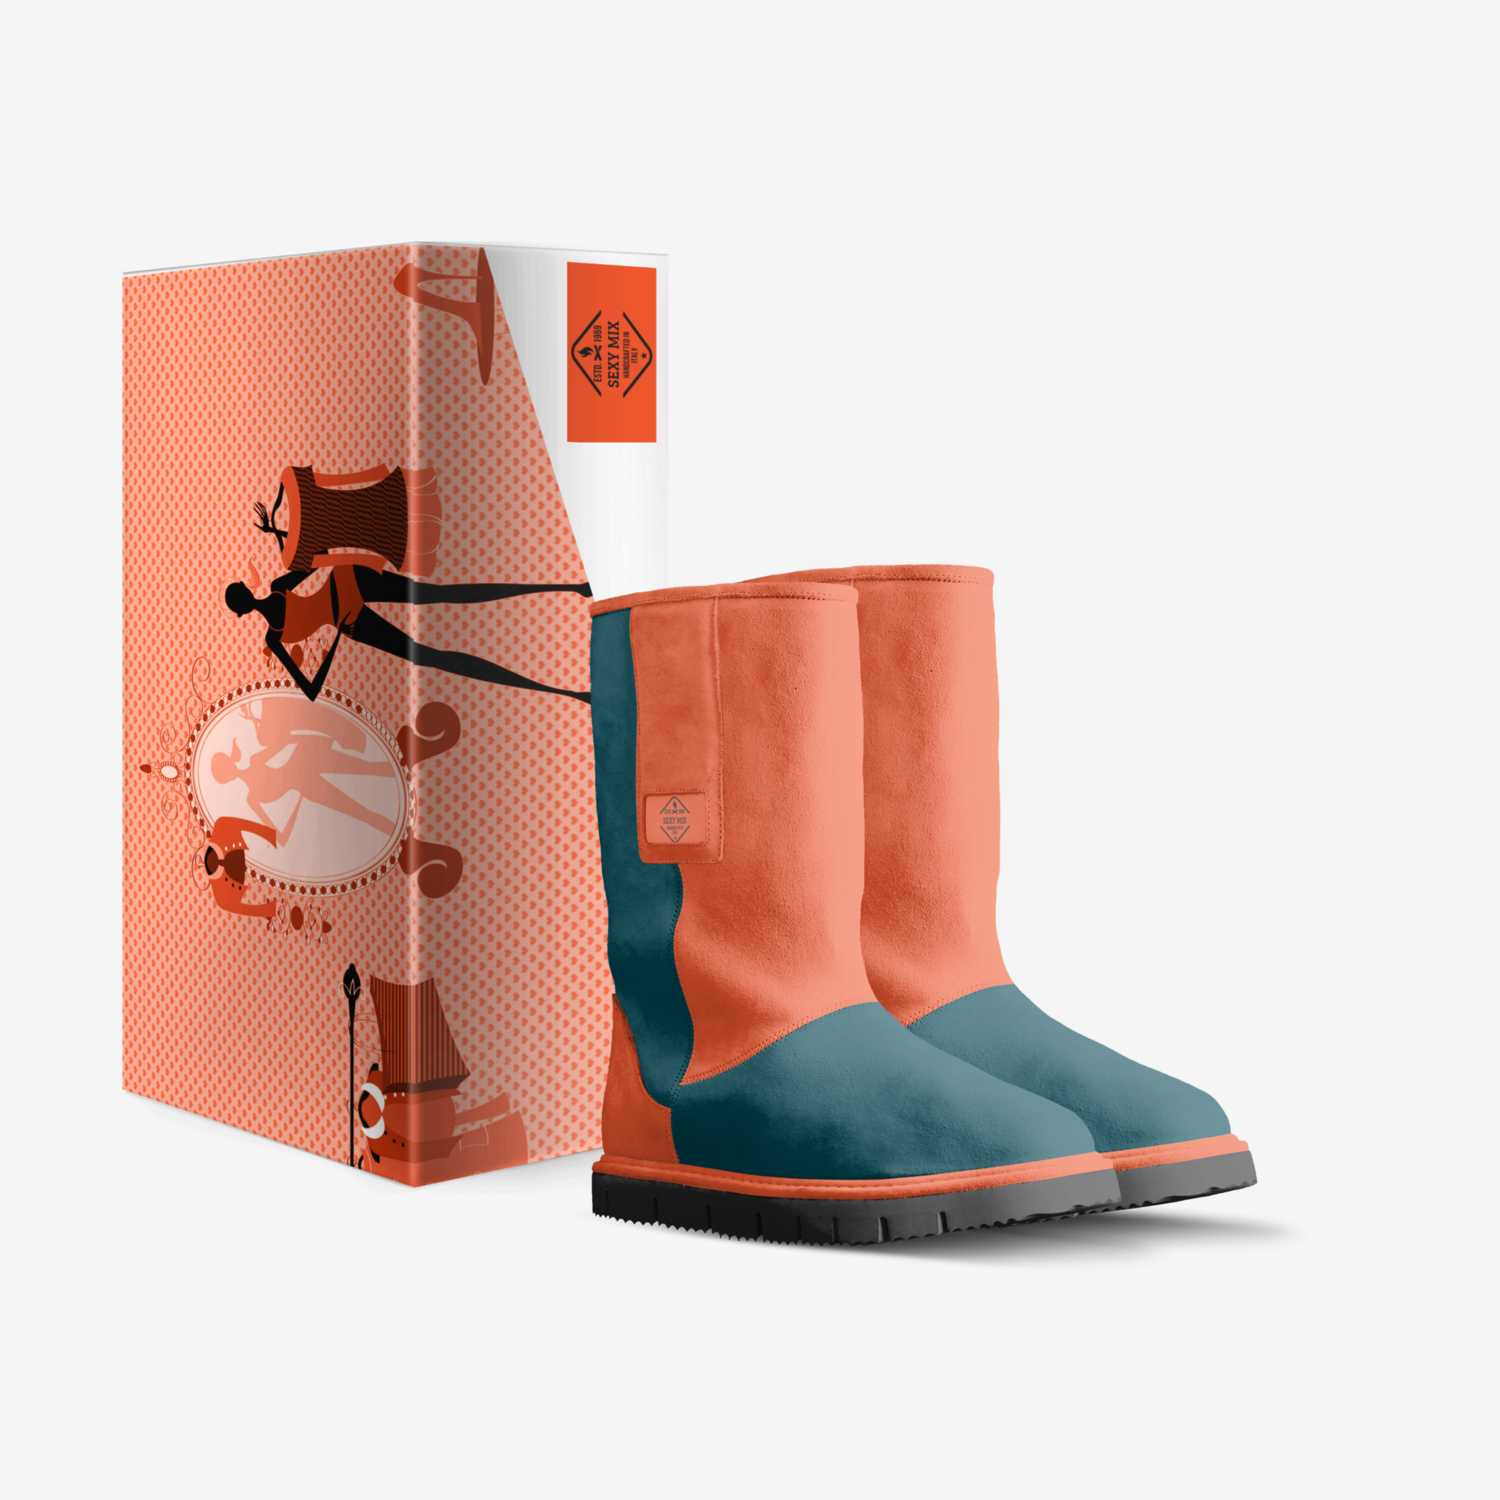 Sexy Mix custom made in Italy shoes by Natasha Robinson | Box view